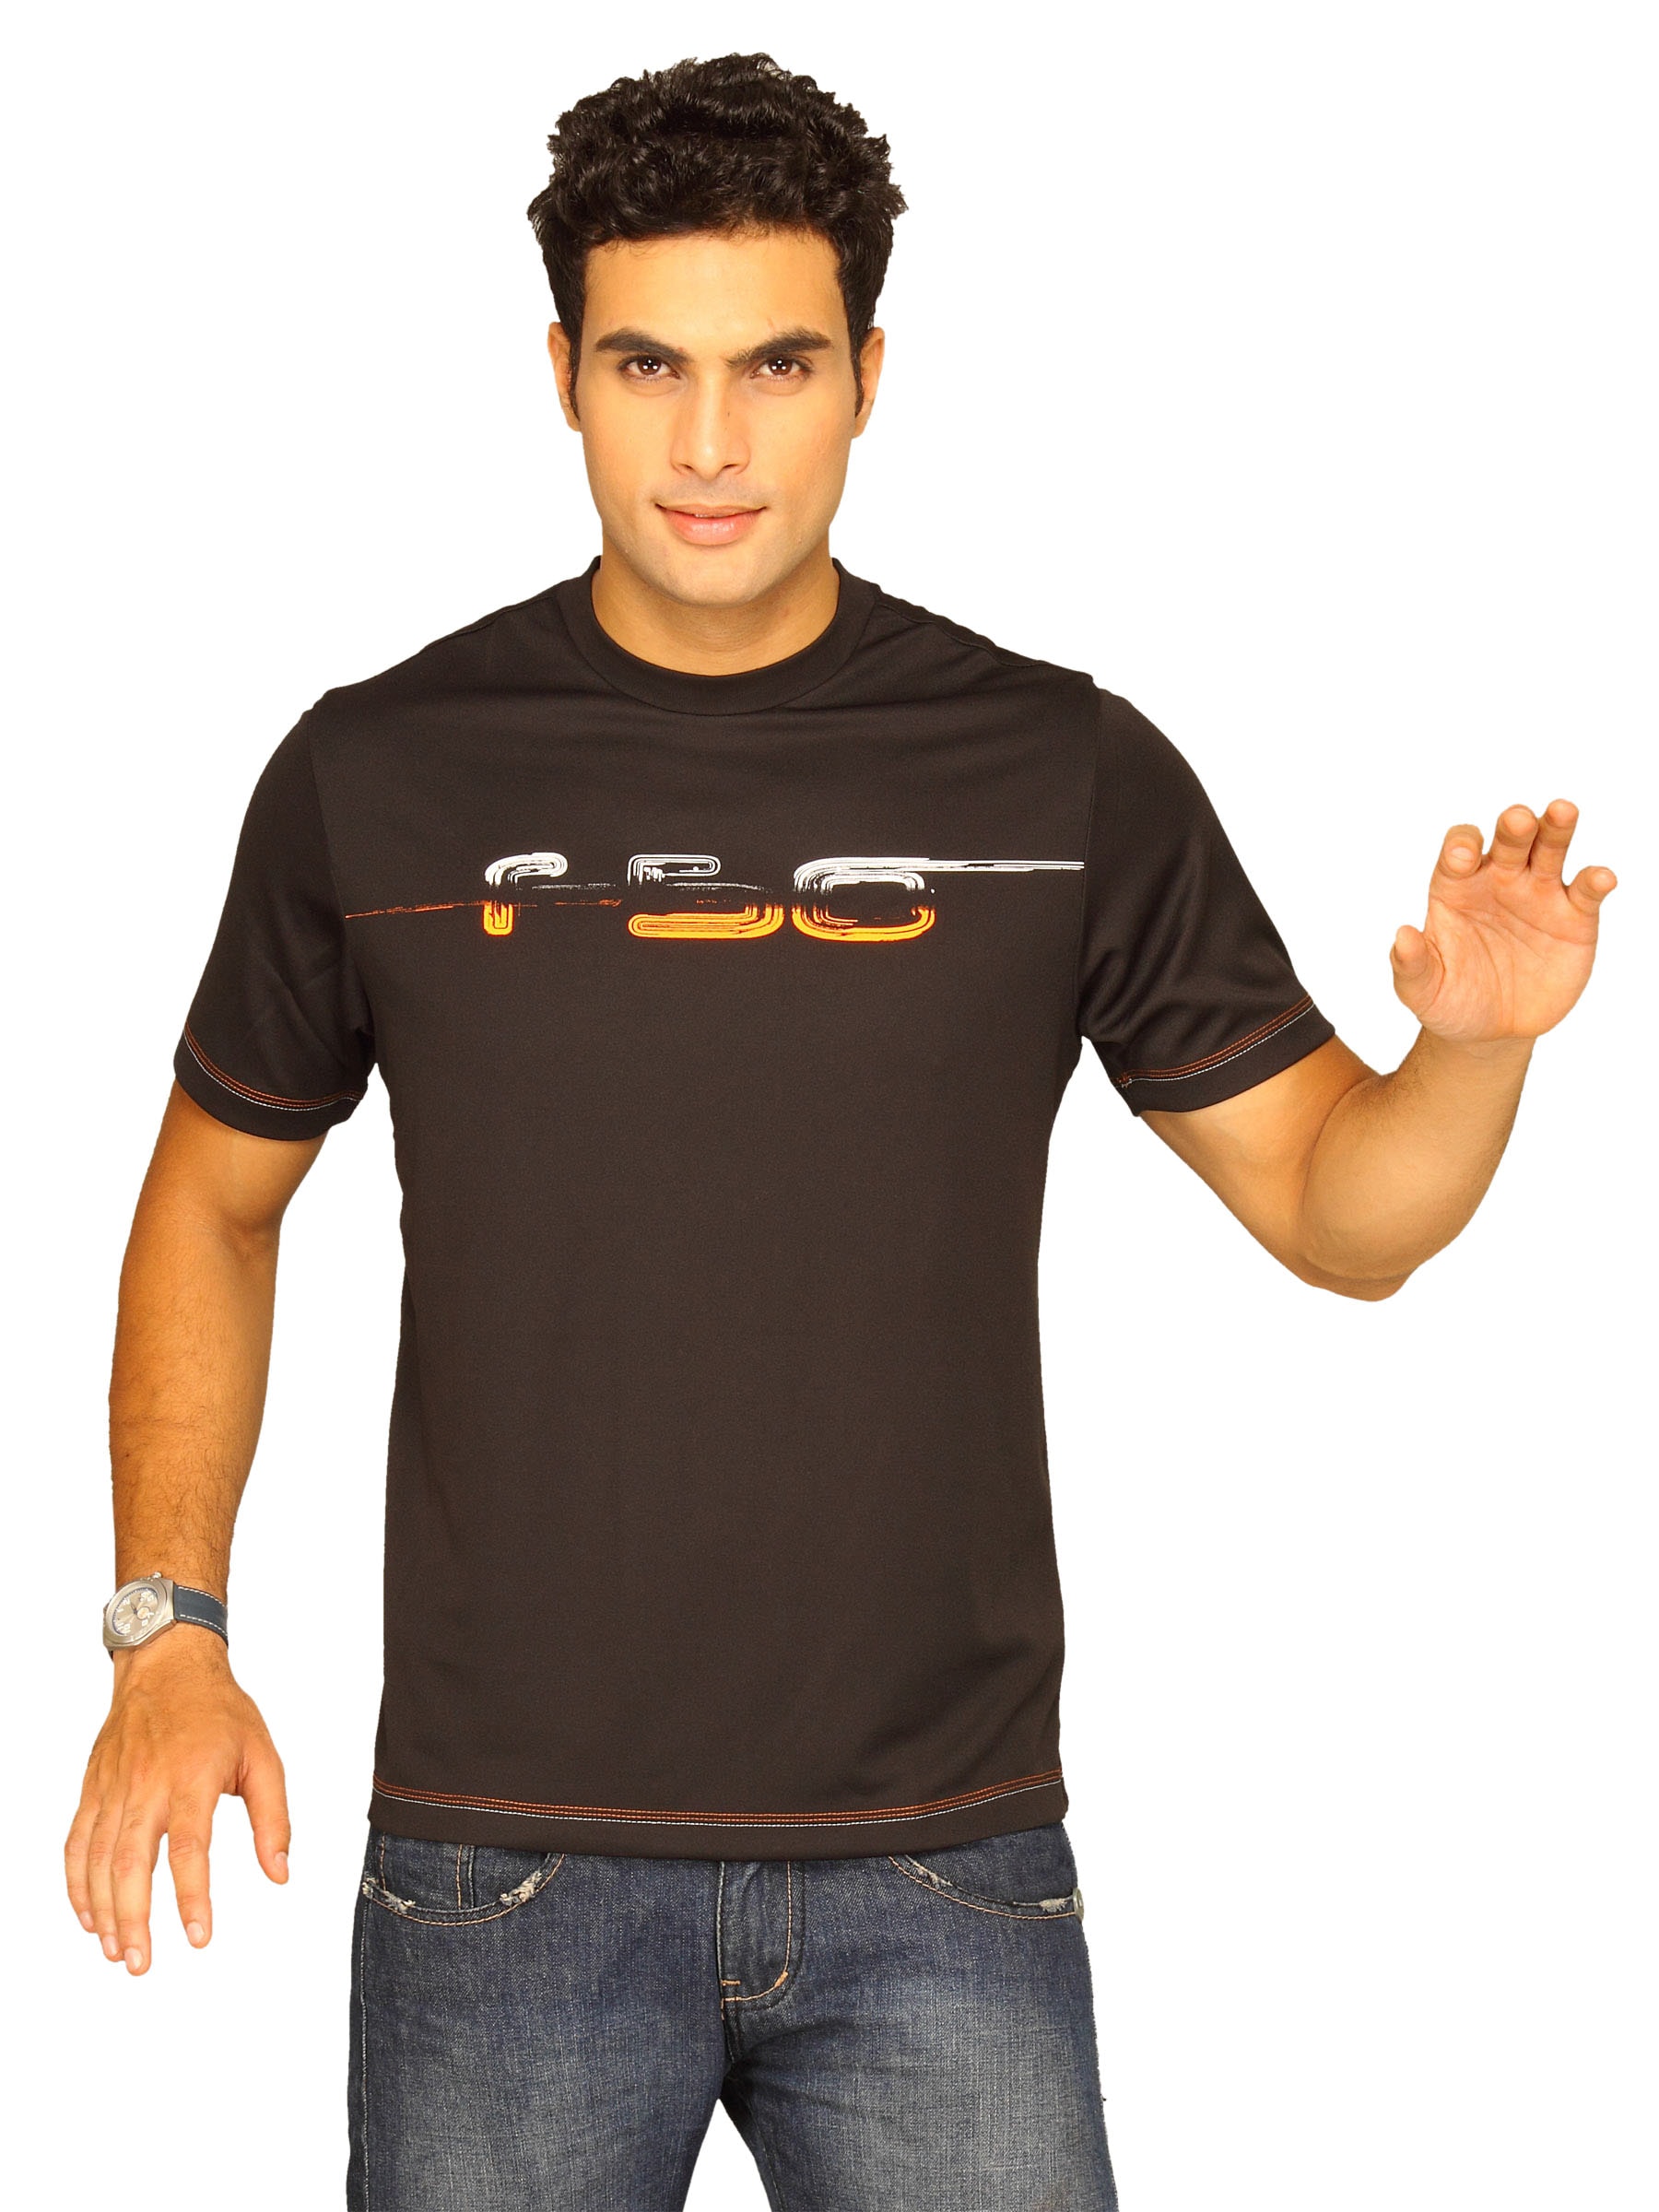 ADIDAS Men's F50 St Pes Black T-Shirt